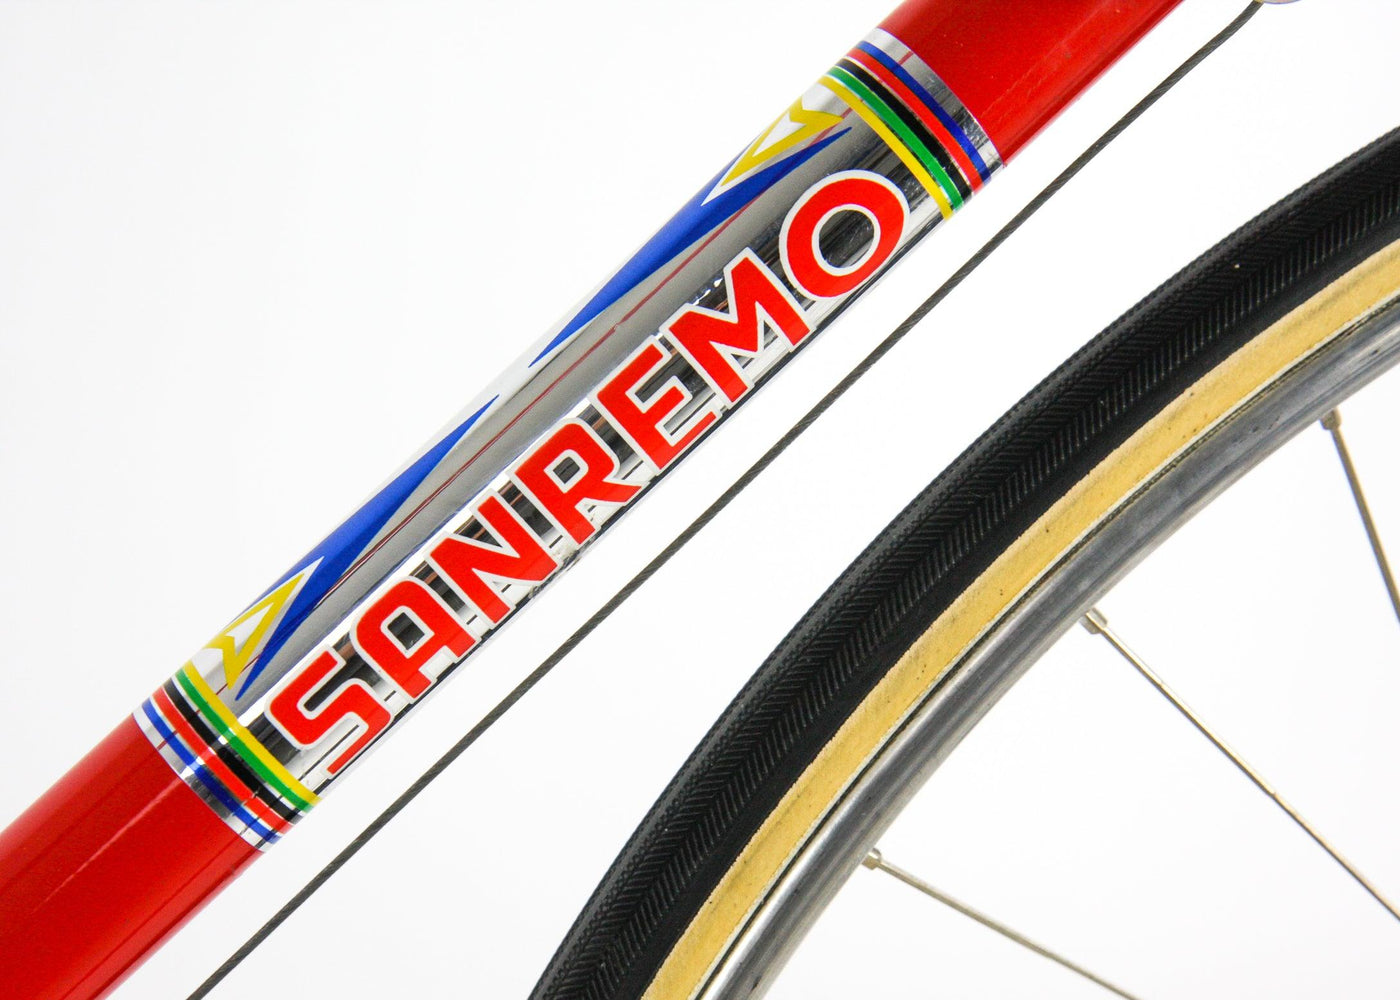 Sanremo Modello Extra Classic Bicycle 1970s - Steel Vintage Bikes